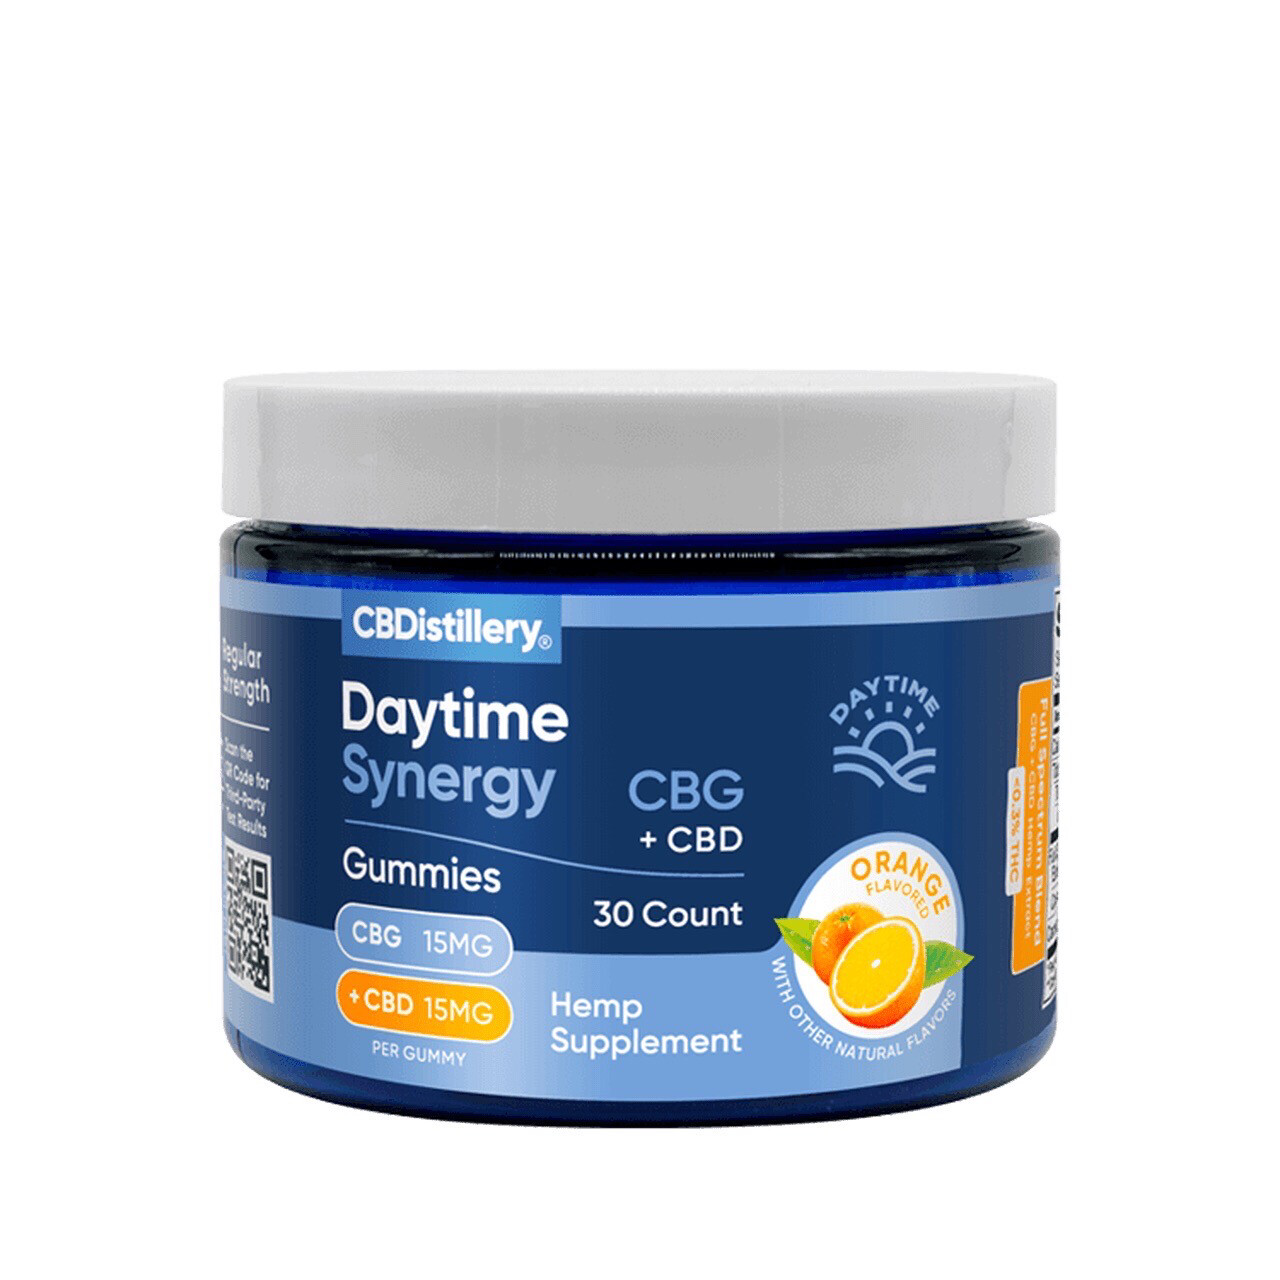 CBDistillery - Daytime Synergy Gummies - 15mg CBG + 15mg CBD - Orange - 30ct